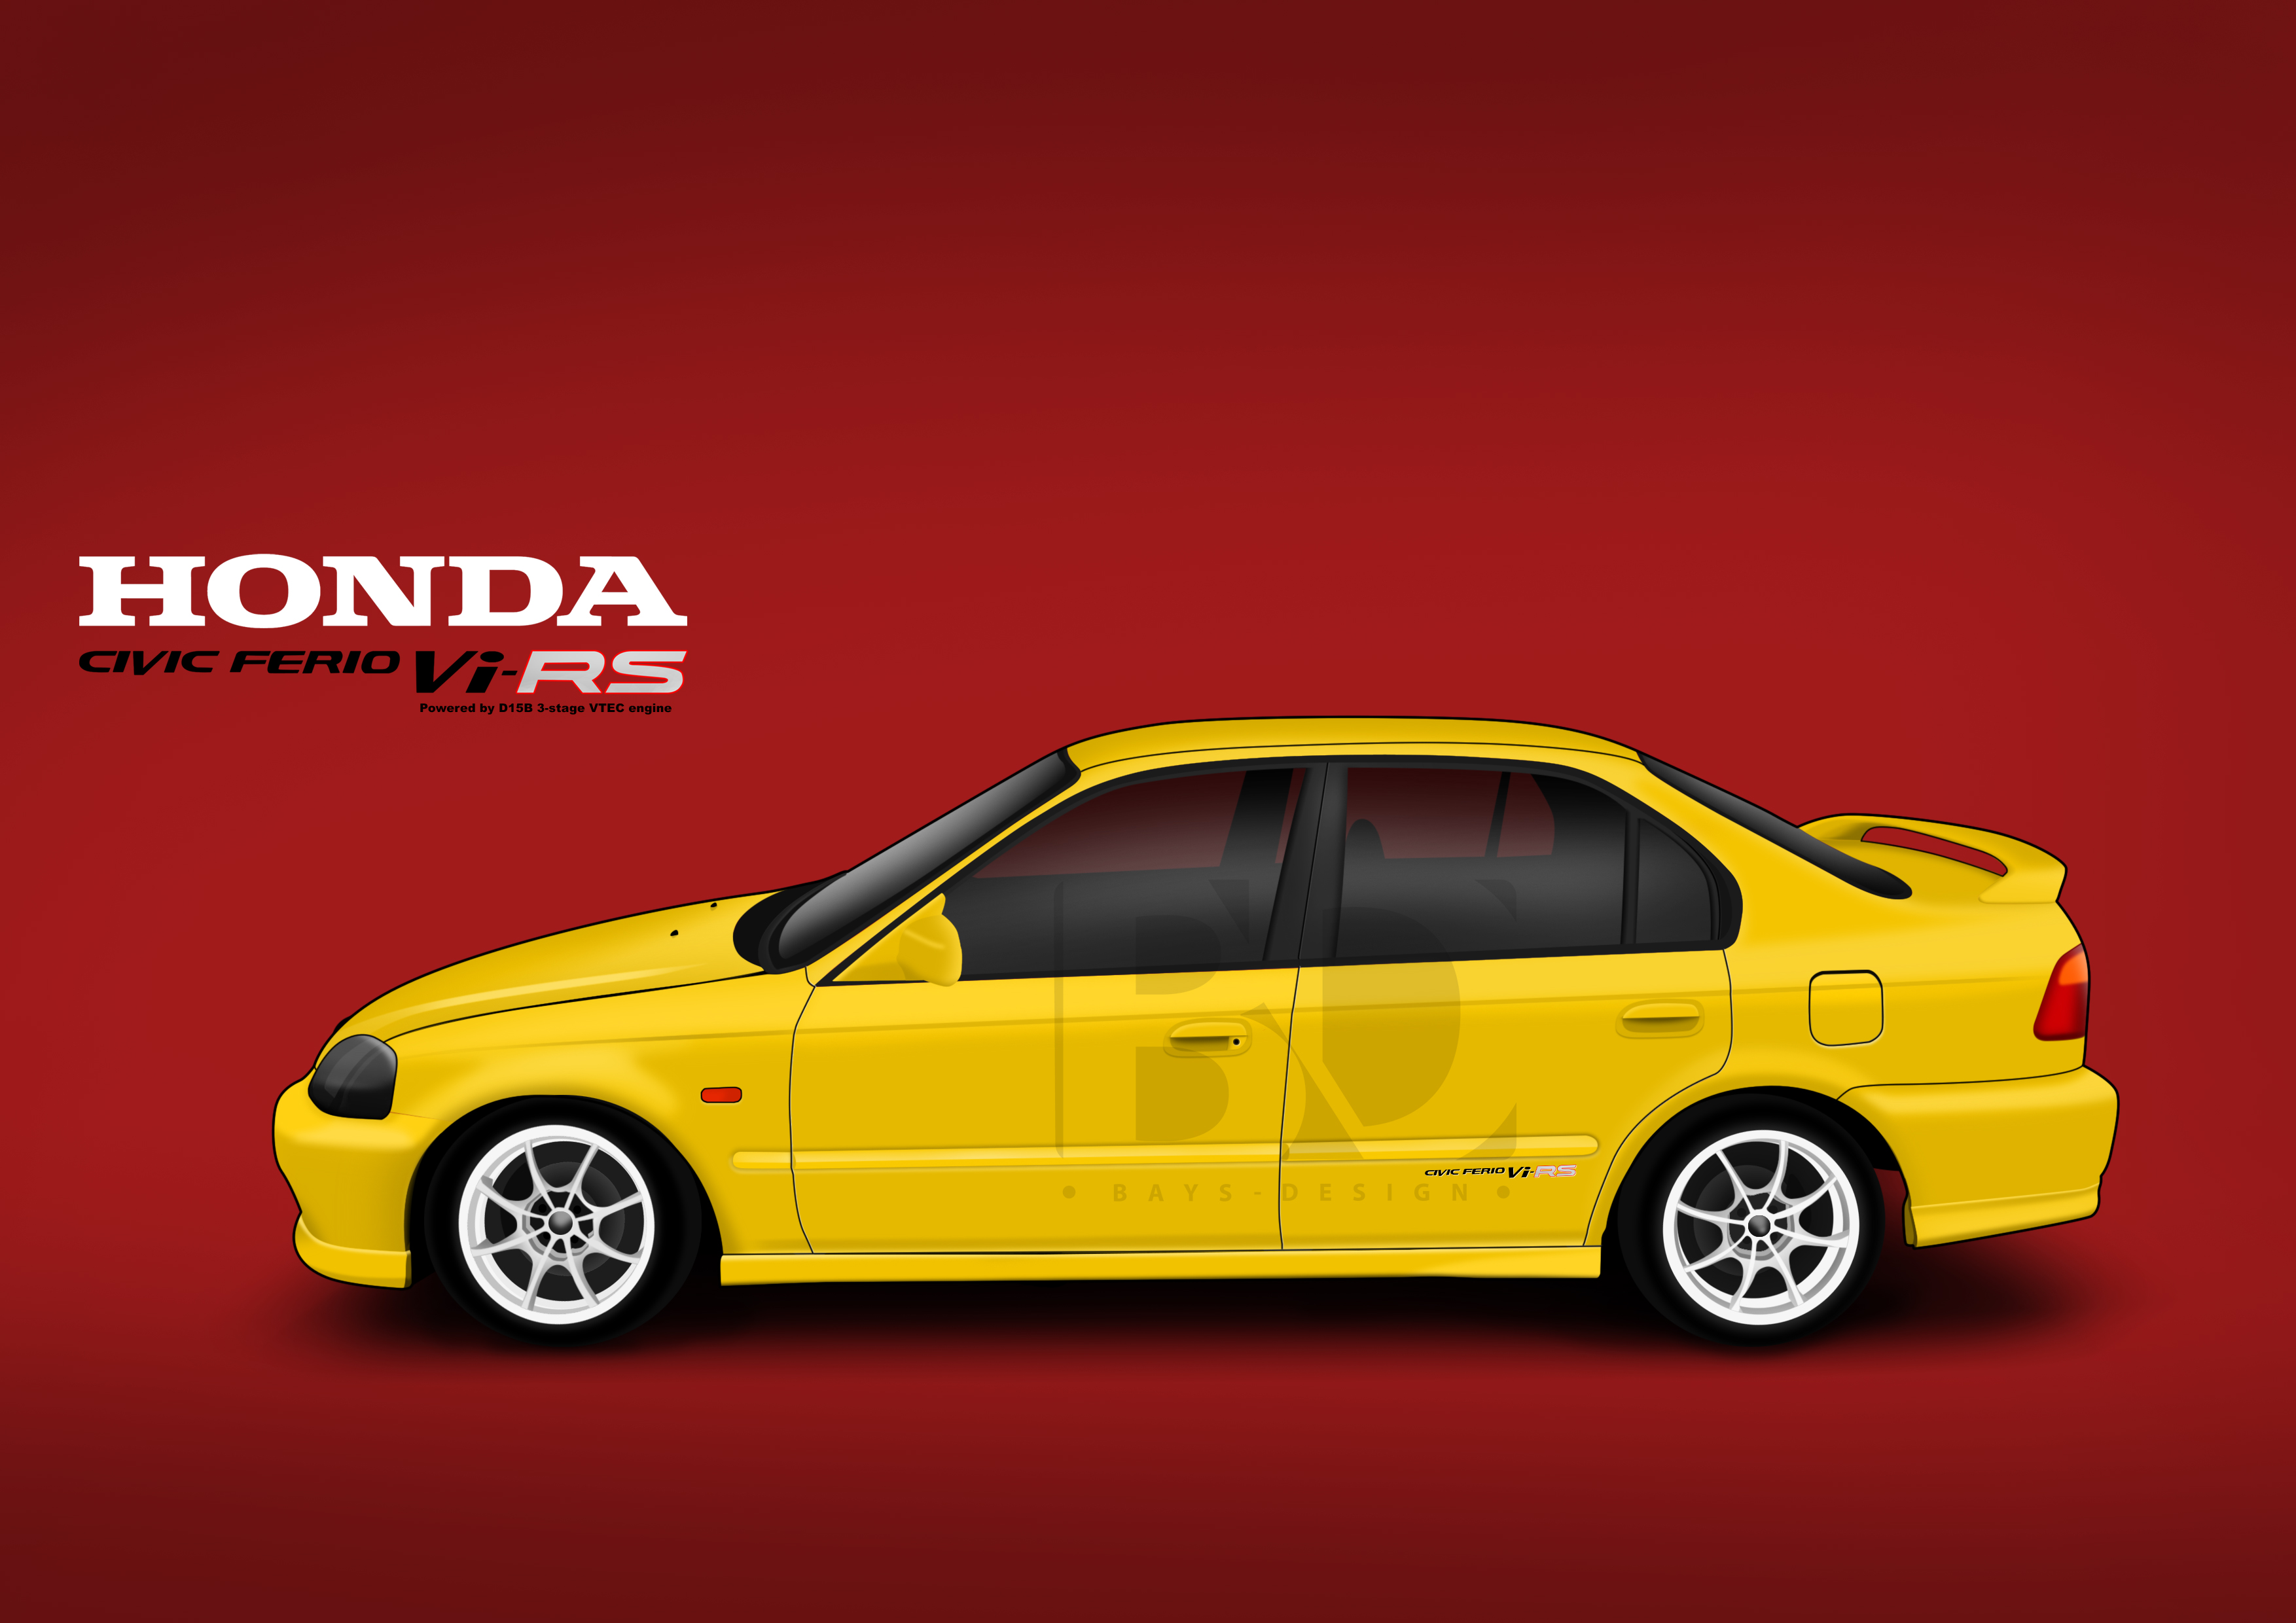 Honda Civic Ferio ViRS '98 by bayuhariw on DeviantArt